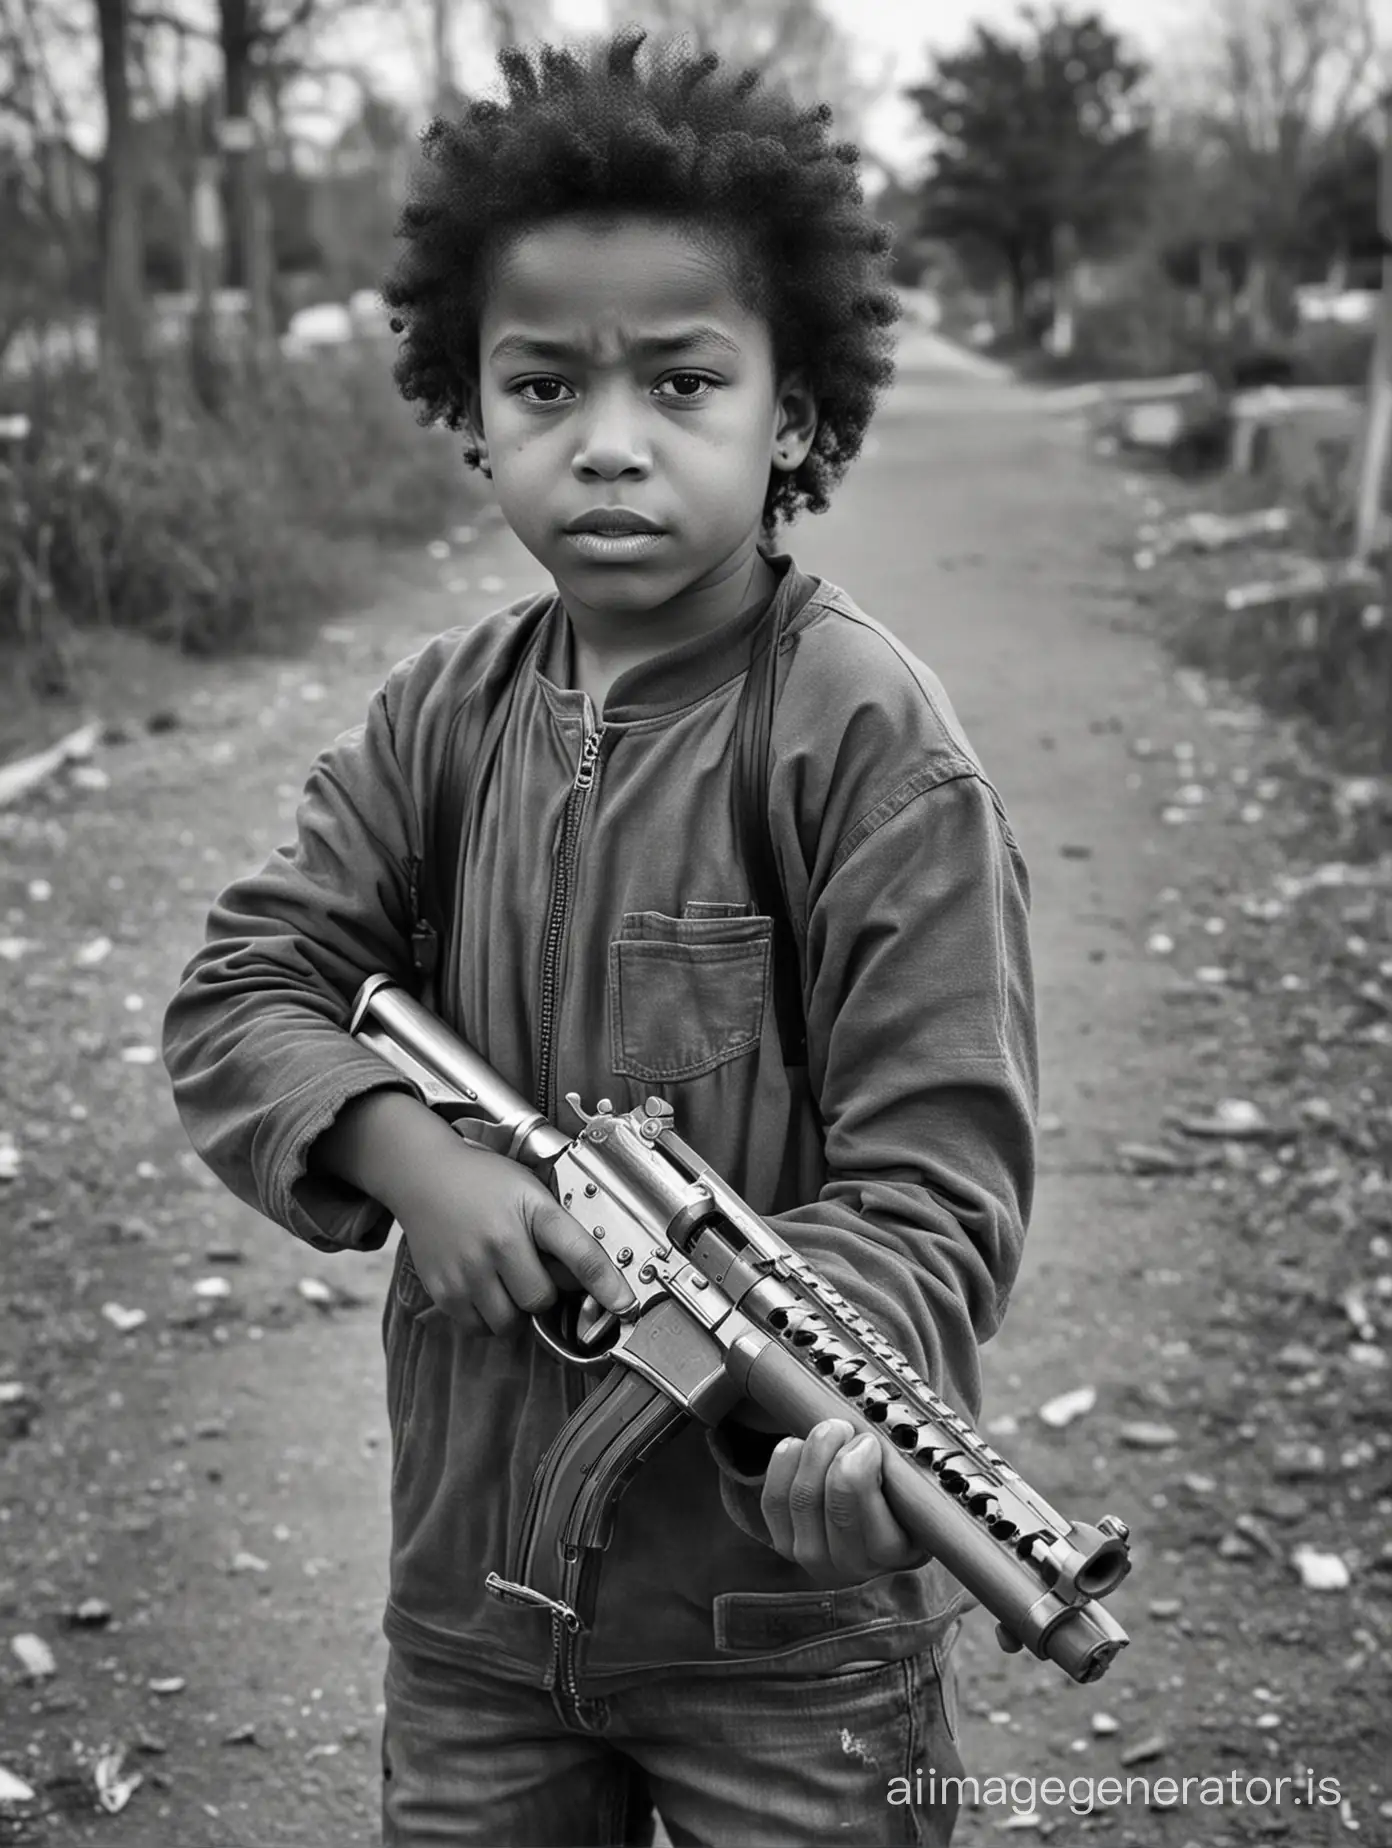 Children and guns violence black and white